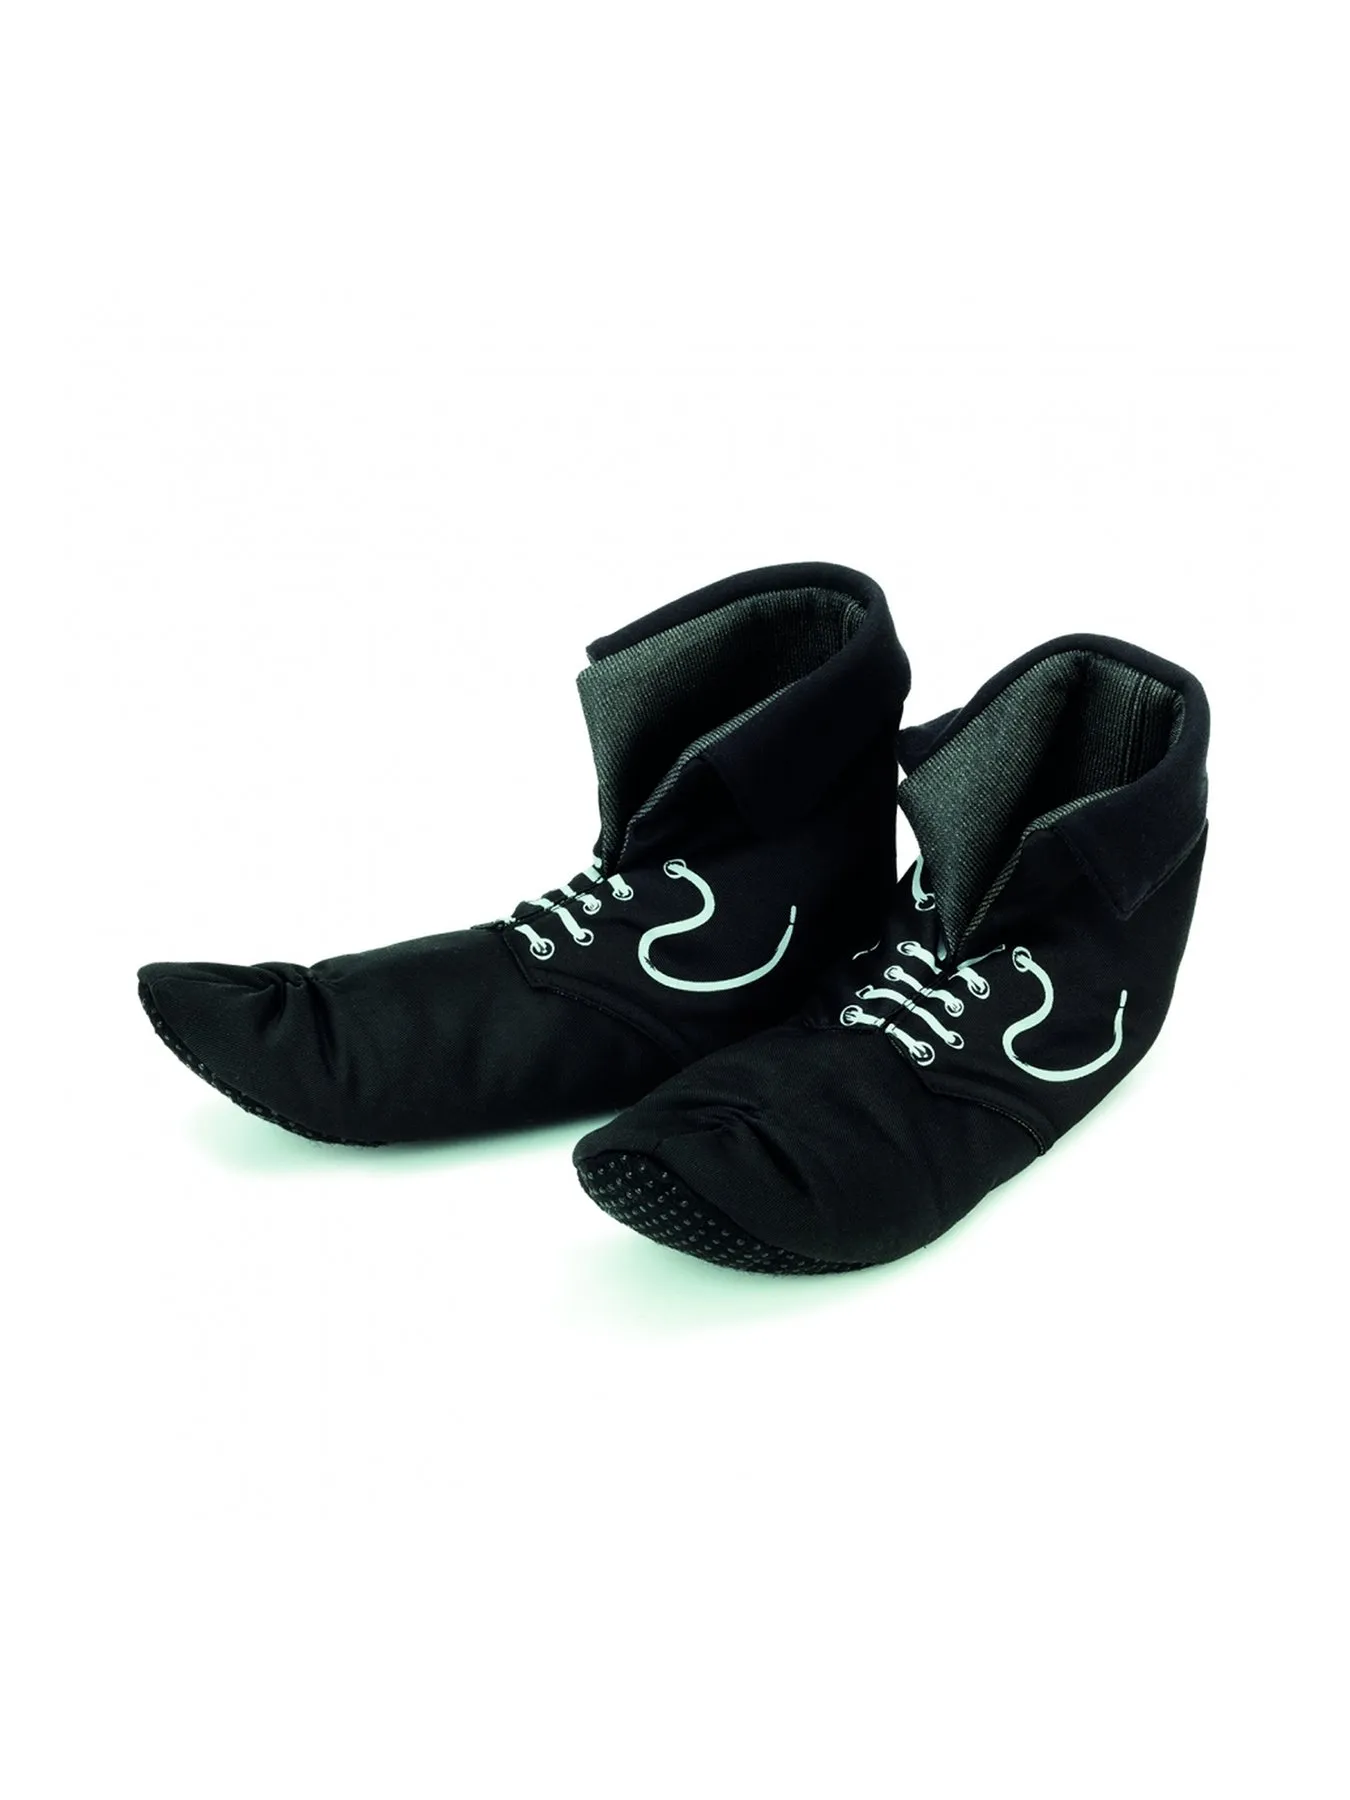 Boots Pippi Longstocking - Black